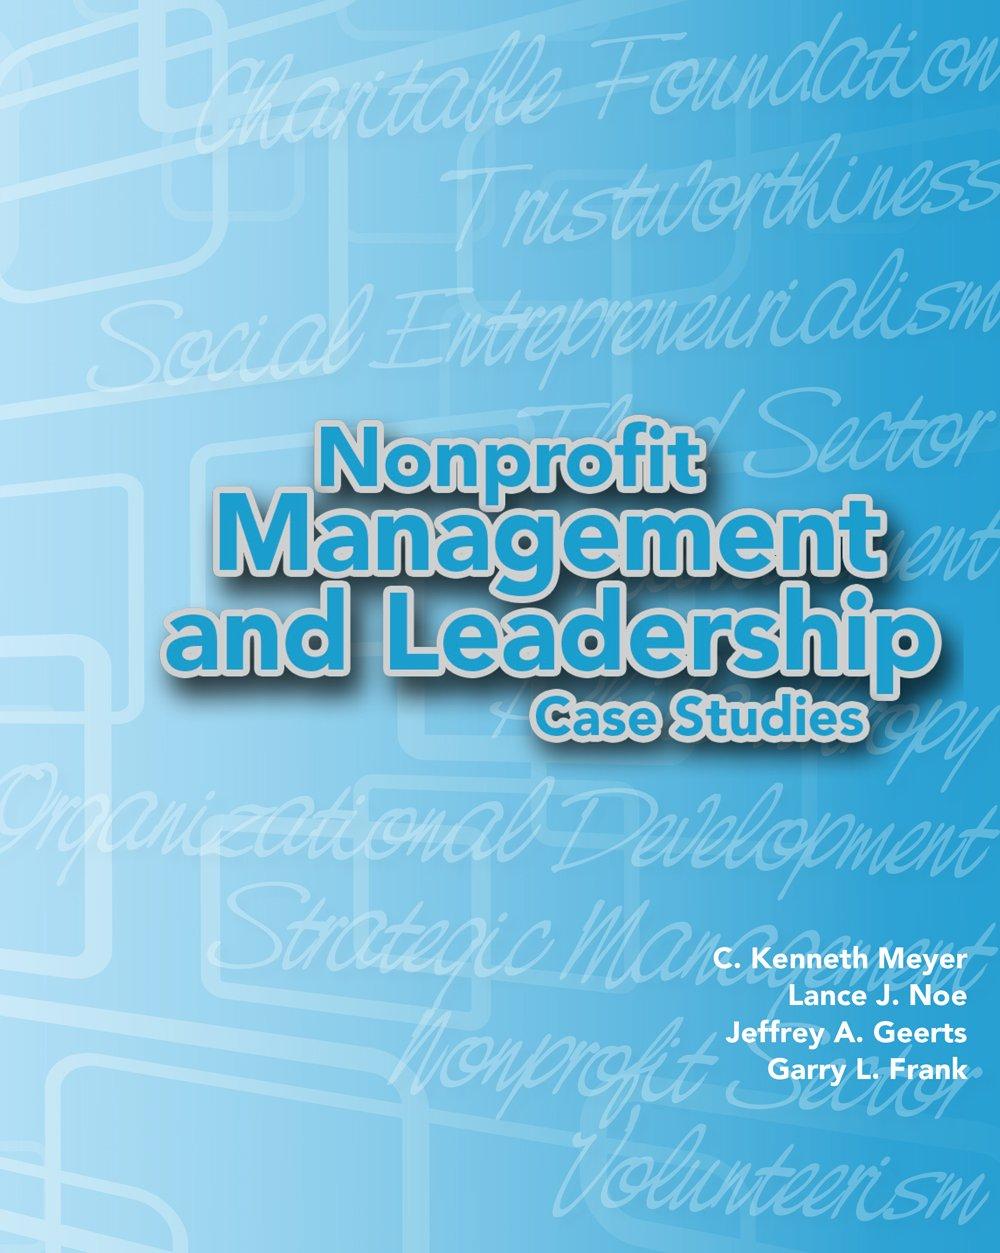 nonprofit management and leadership case studies 1st edition c. kenneth meyer, lance j. noe, garry l. frank,